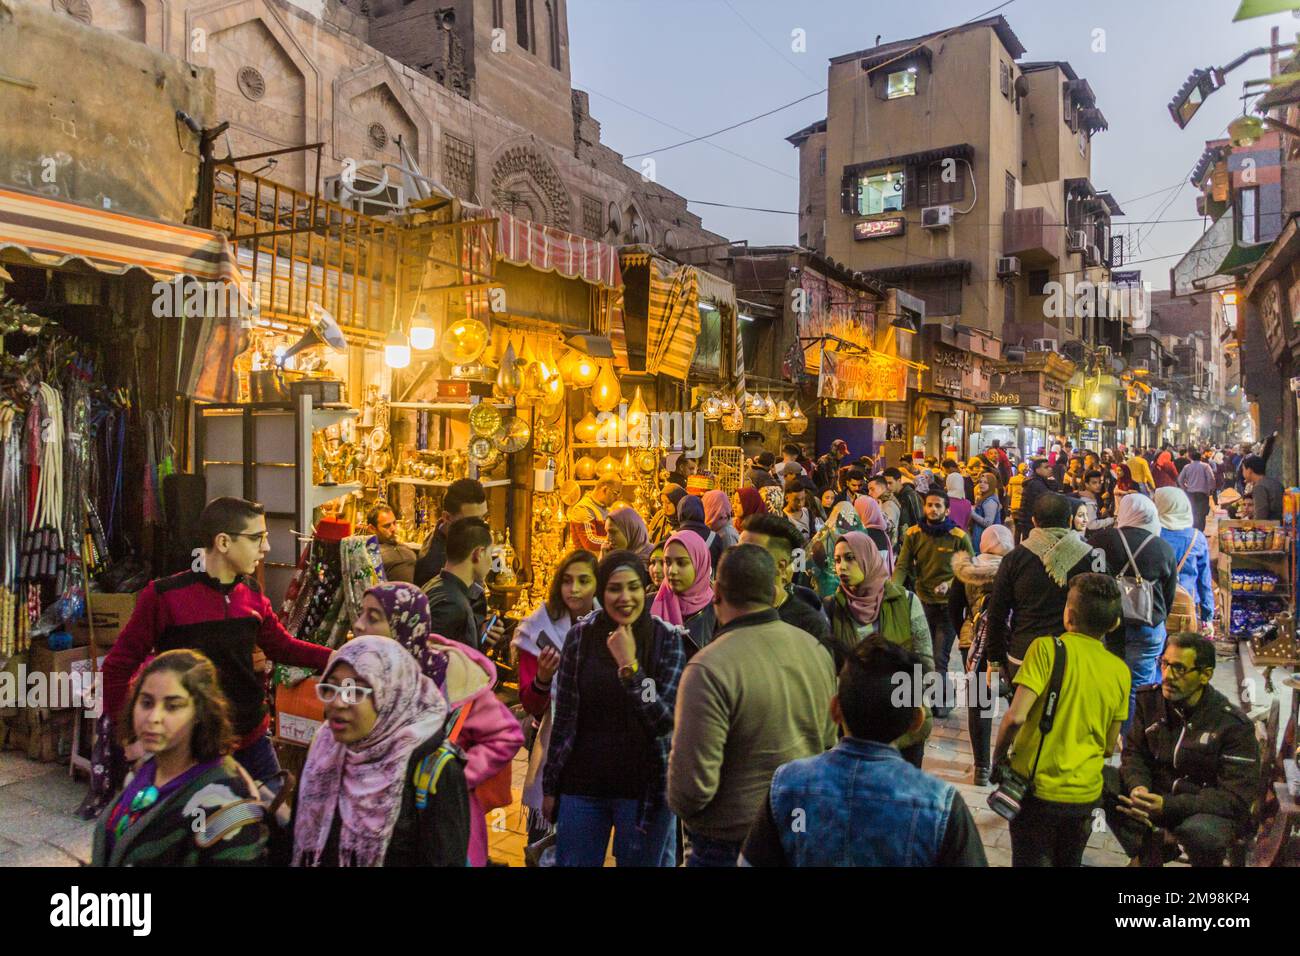 CAIRO, EGYPT - JANUARY 26, 2019: Al Moez street in the historic center of Cairo, Egypt Stock Photo